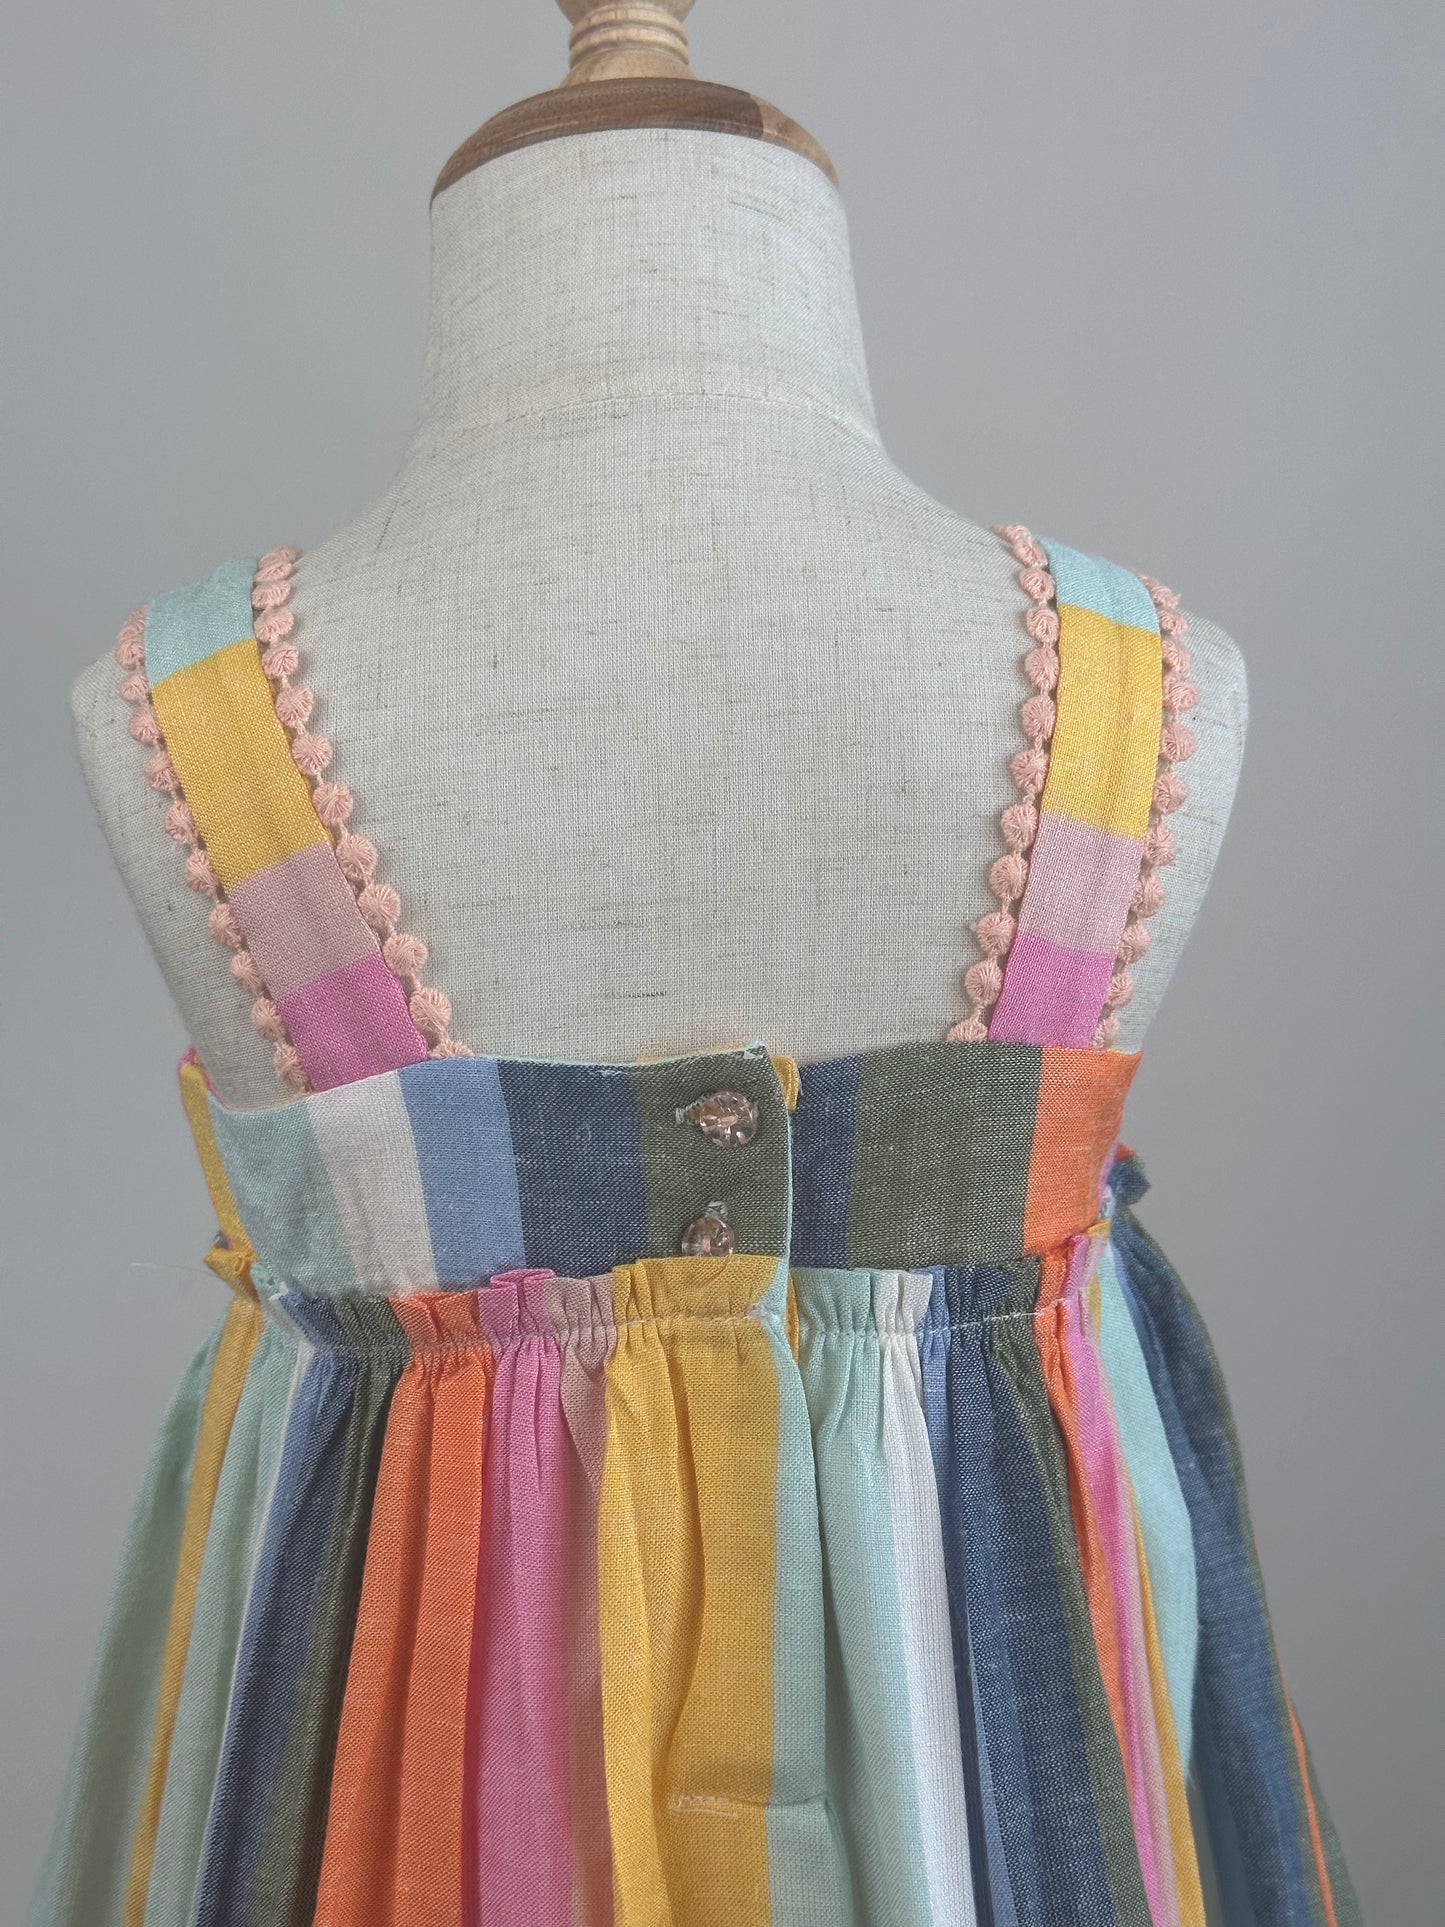 Tahari Baby - Striped Dress